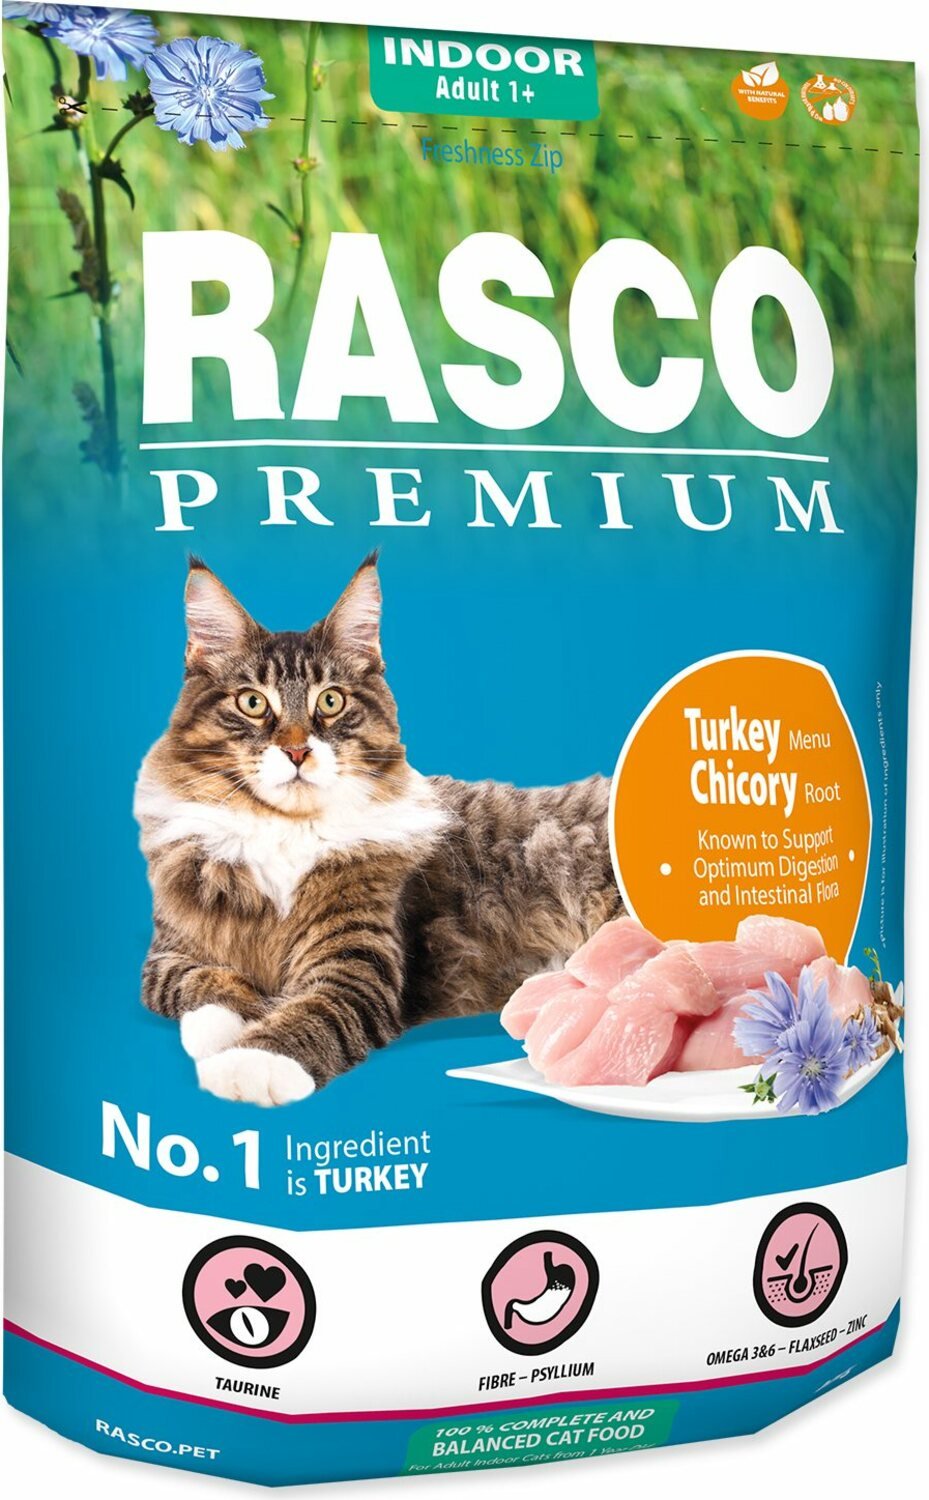 Krmivo Rasco Premium Indoor krůta s kořenem čekanky 0,4kg